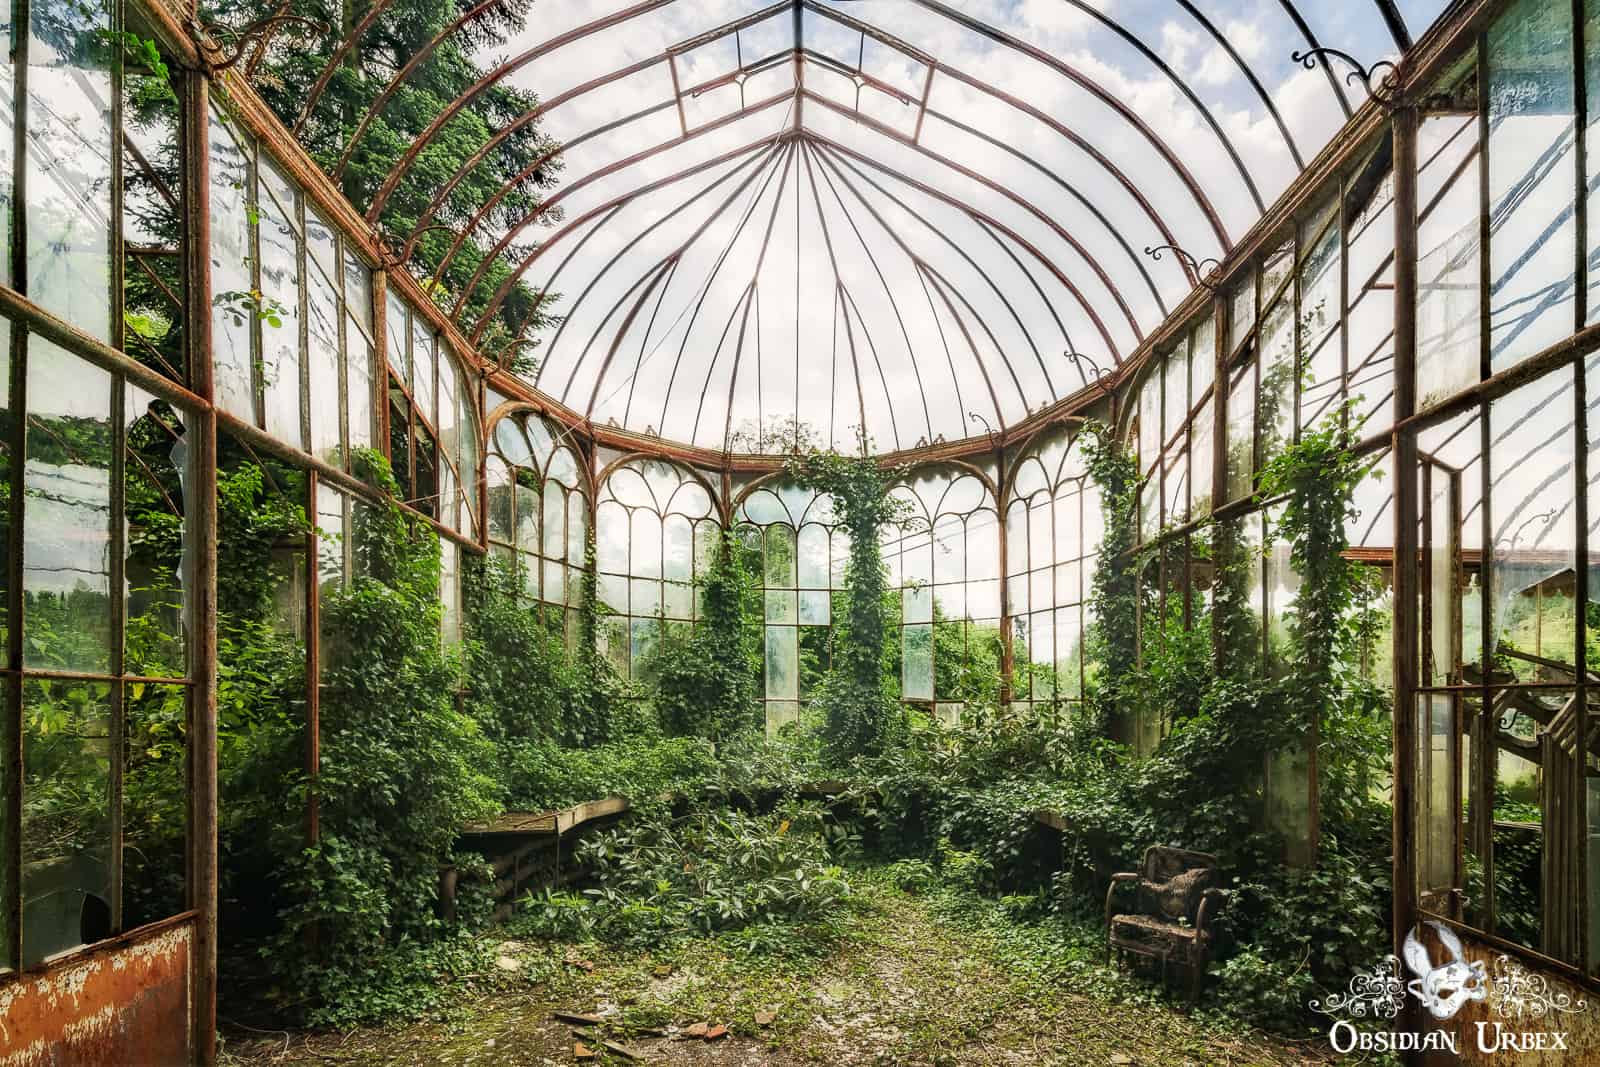 02_chateau-rolls-royce-belgium-abandoned-overgrown-greenhouse